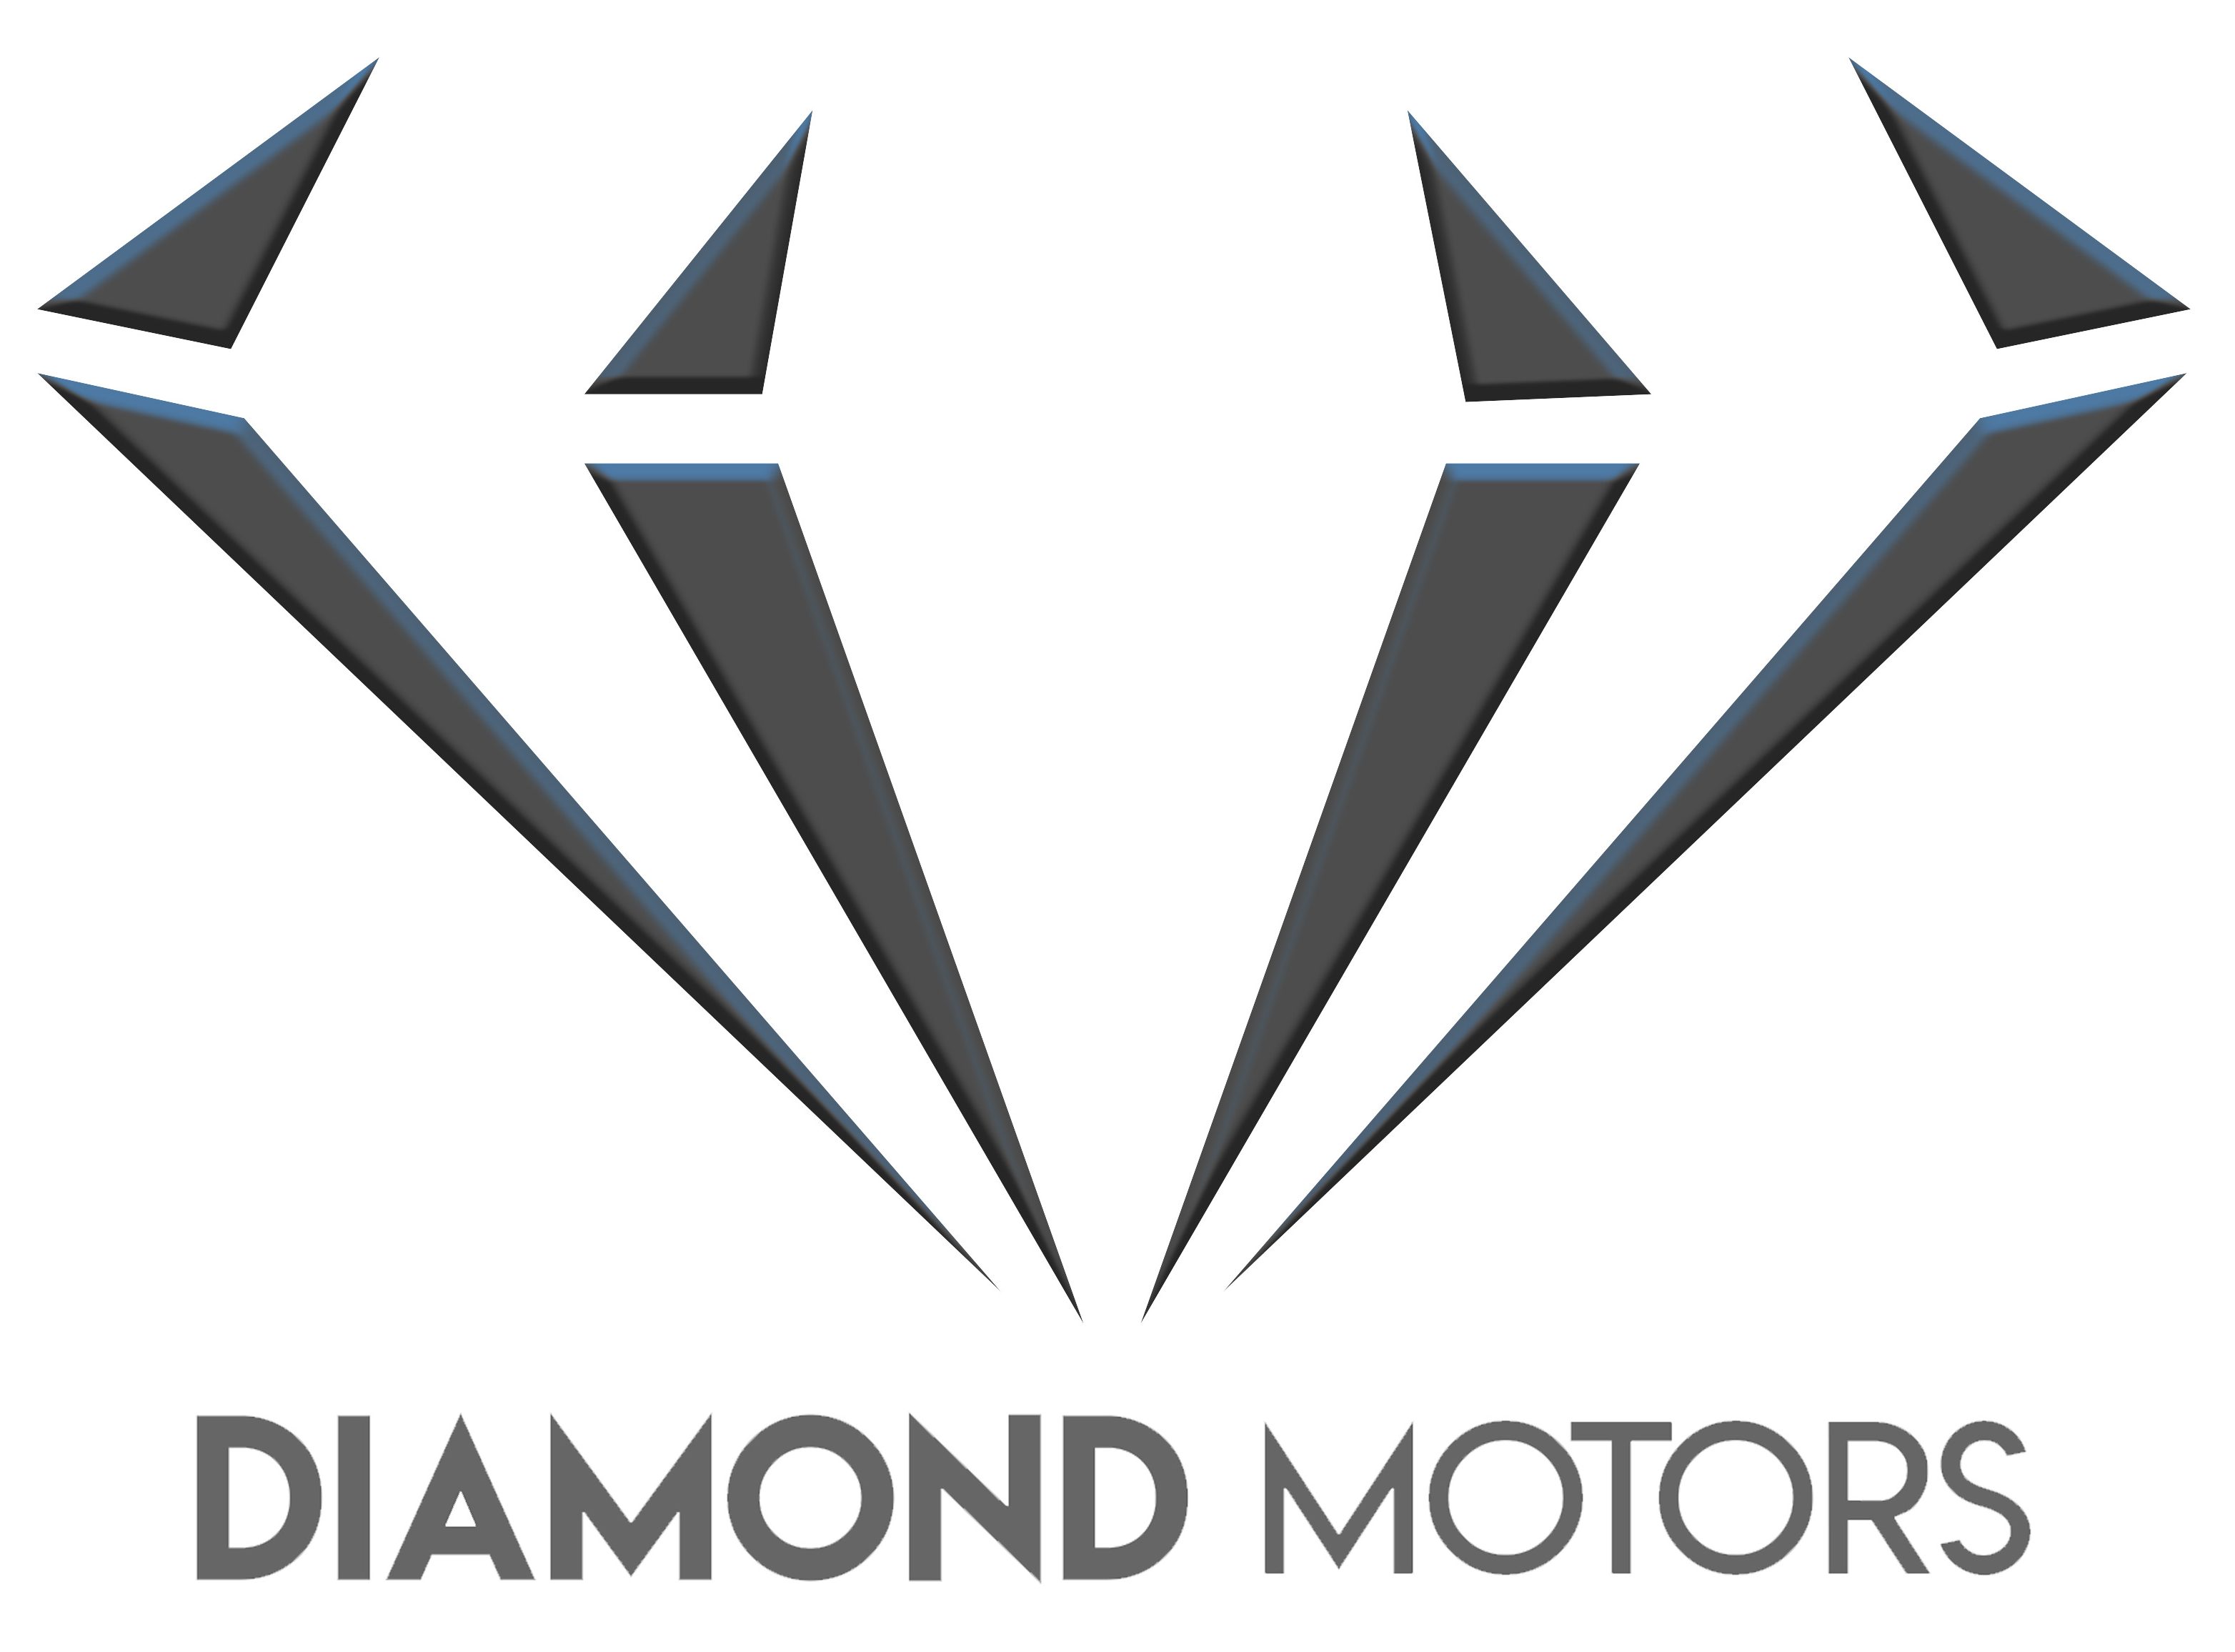 Diamond Motors